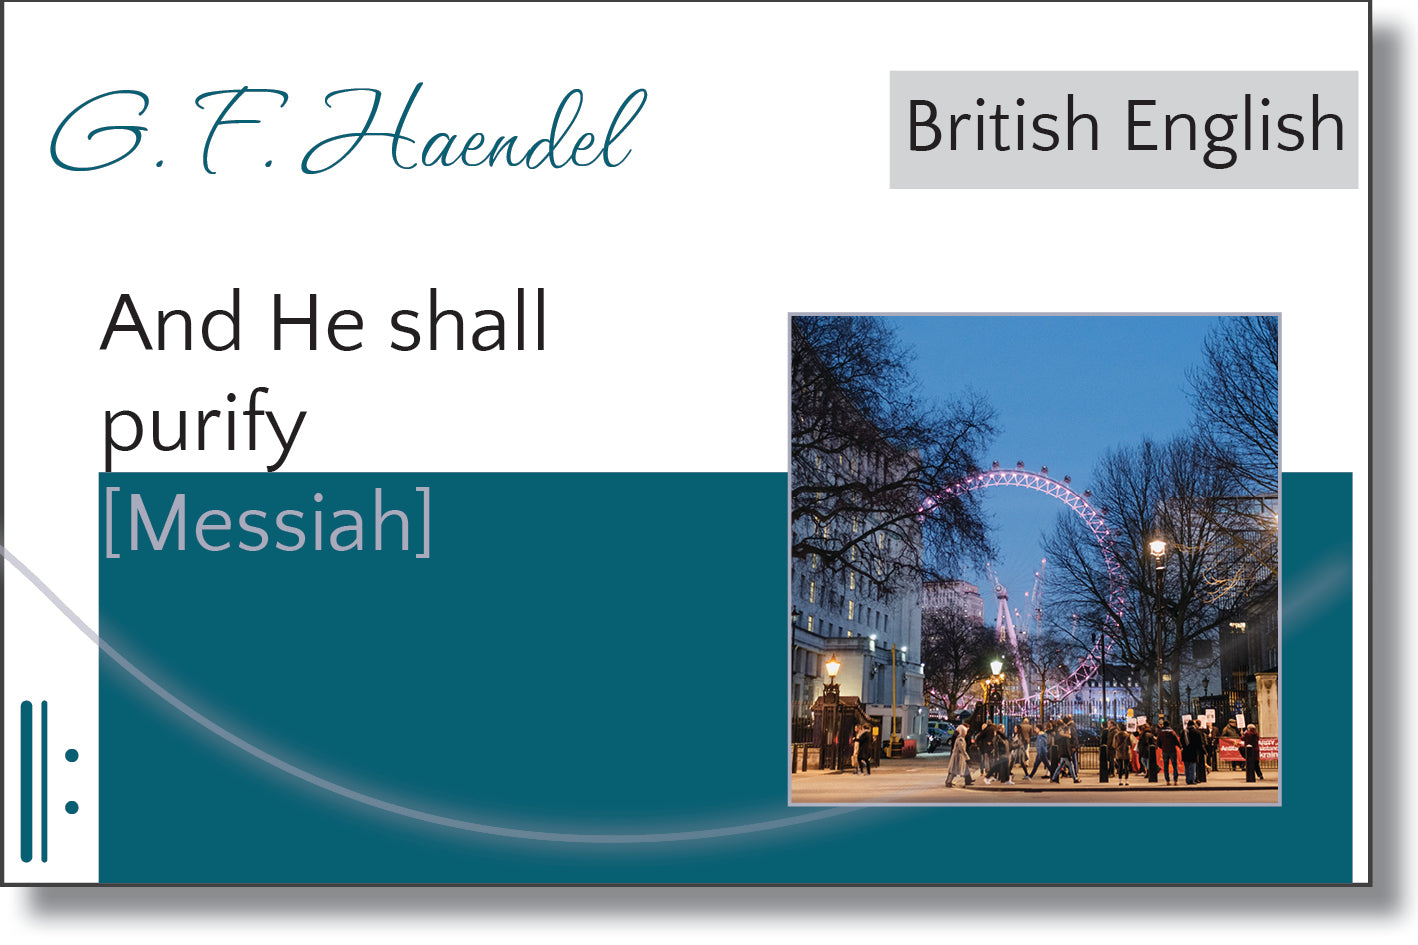 Messiah - And He shall purify